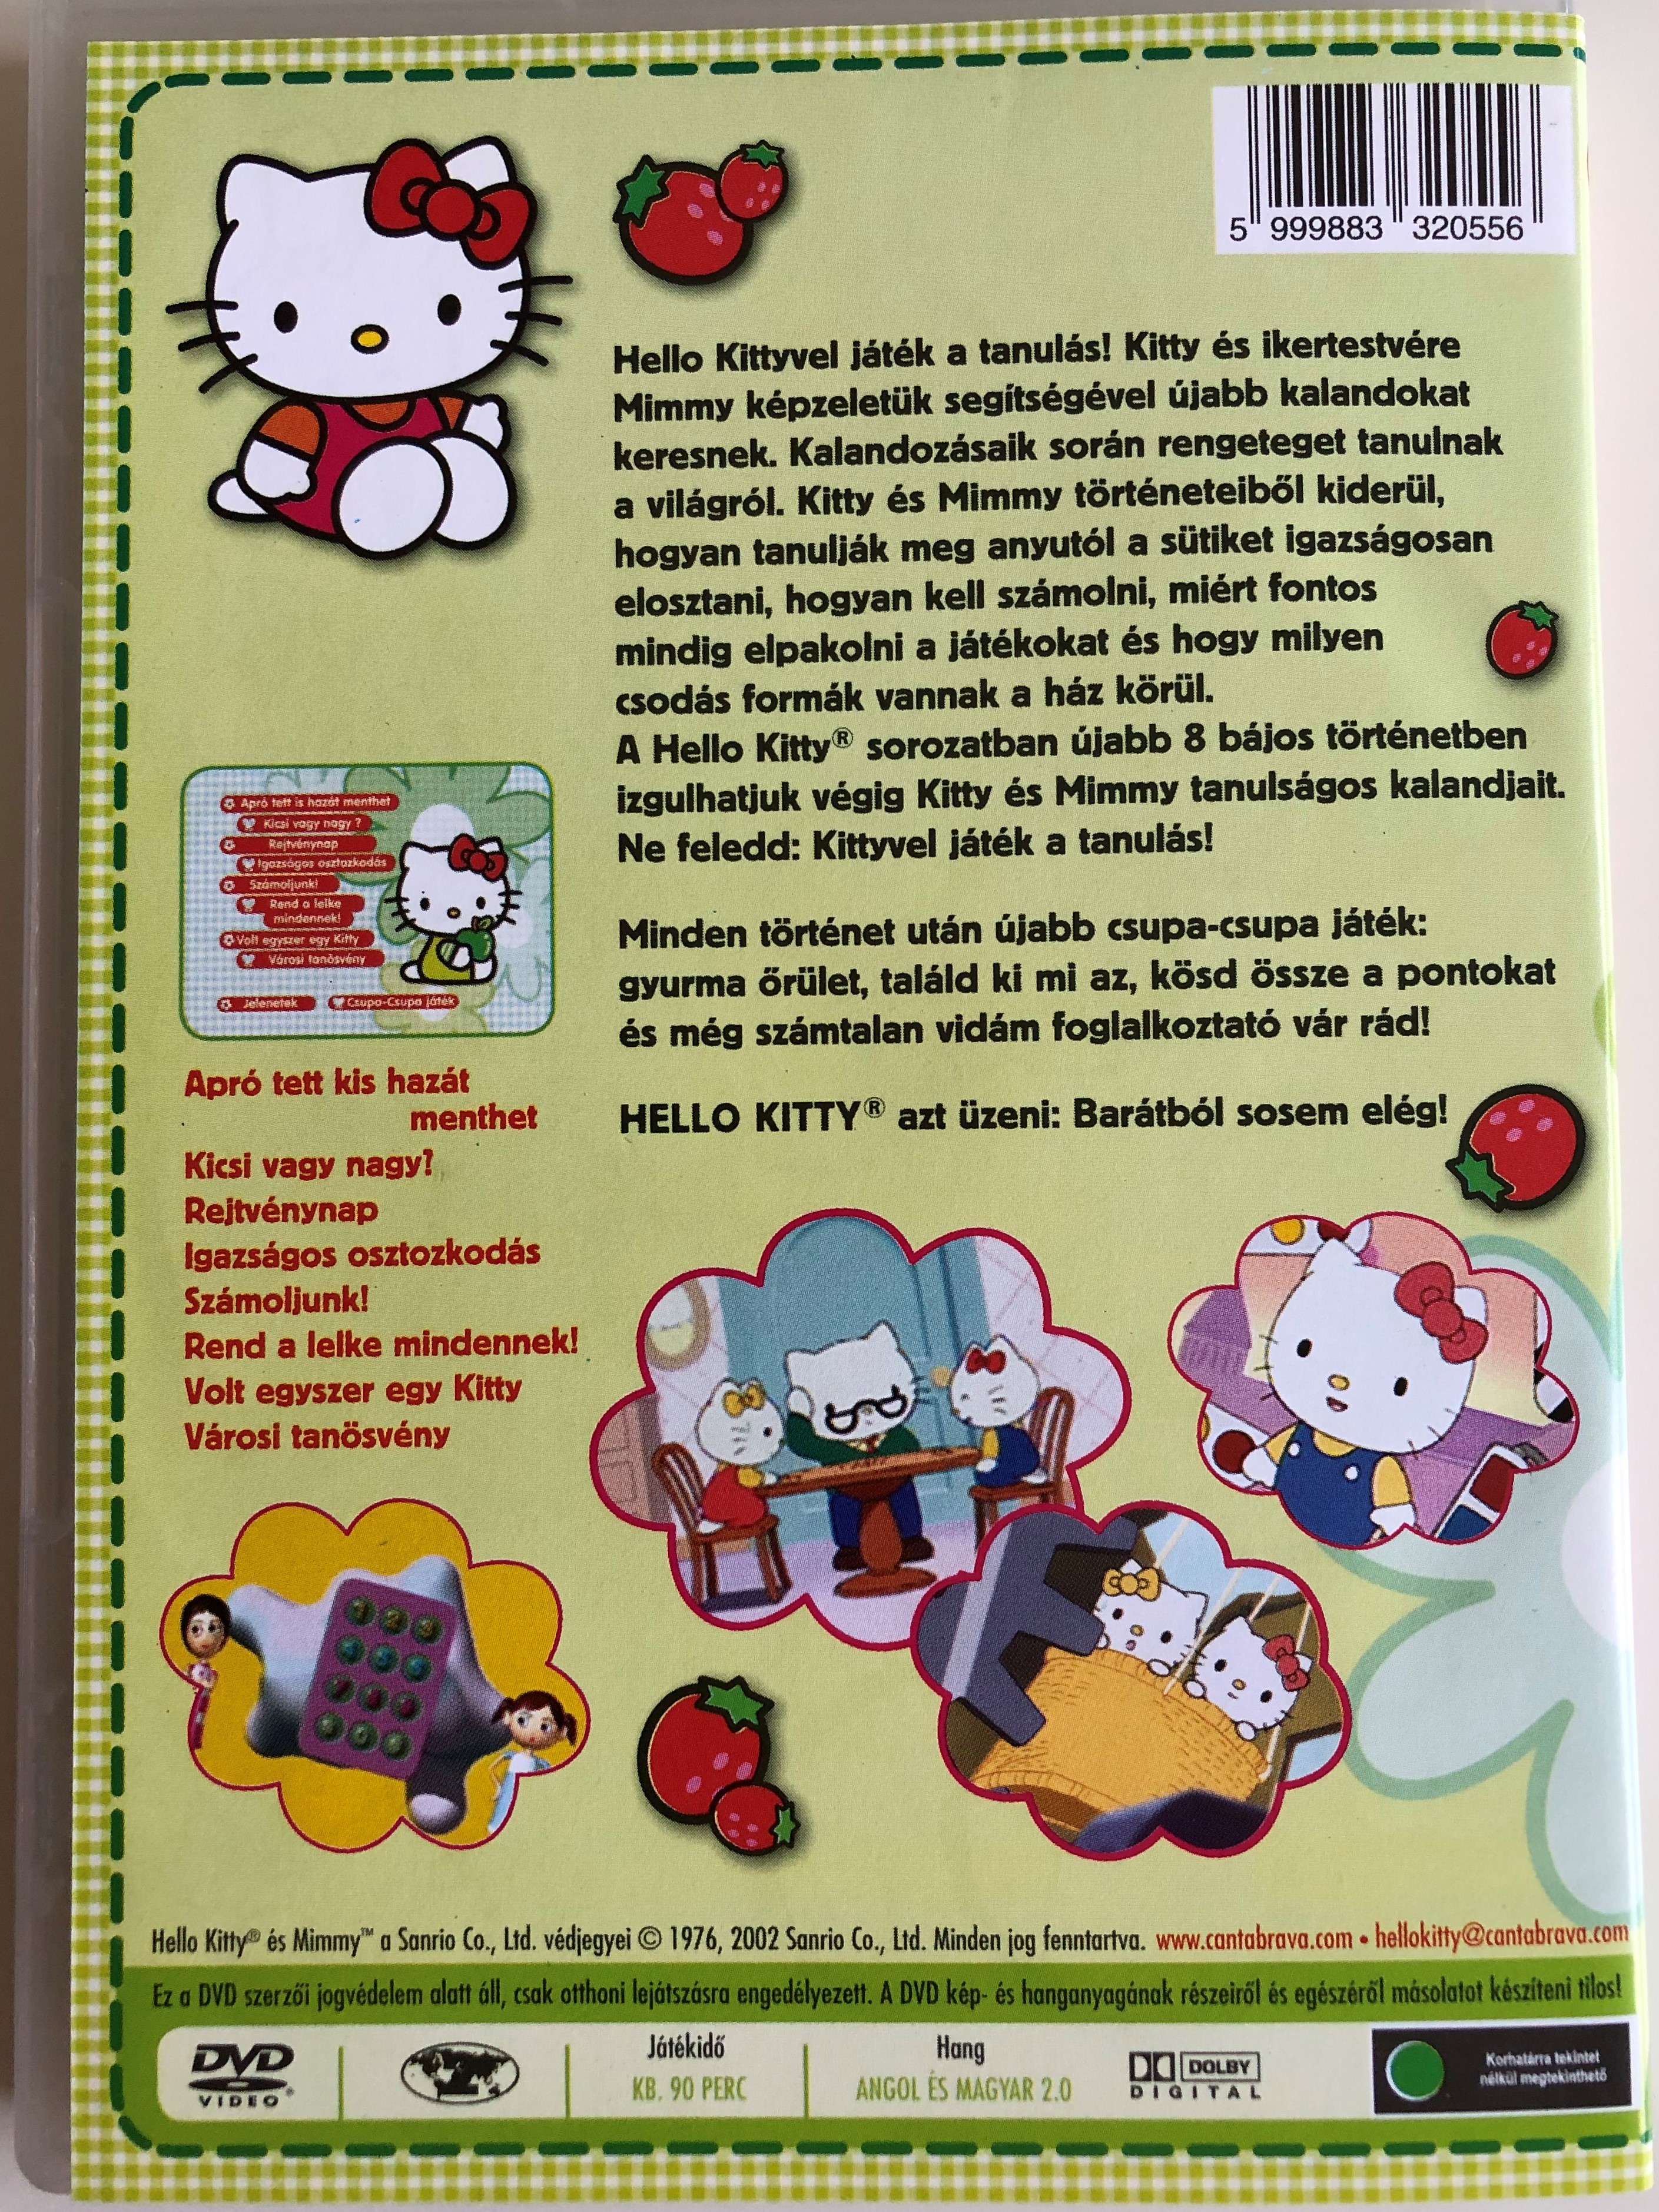 hello-kitty-s-paradise-dvd-2002-kittyvel-j-t-k-a-tanul-s-directed-by-haruhiko-sakamoto-8-episodes-on-disc-2-.jpg